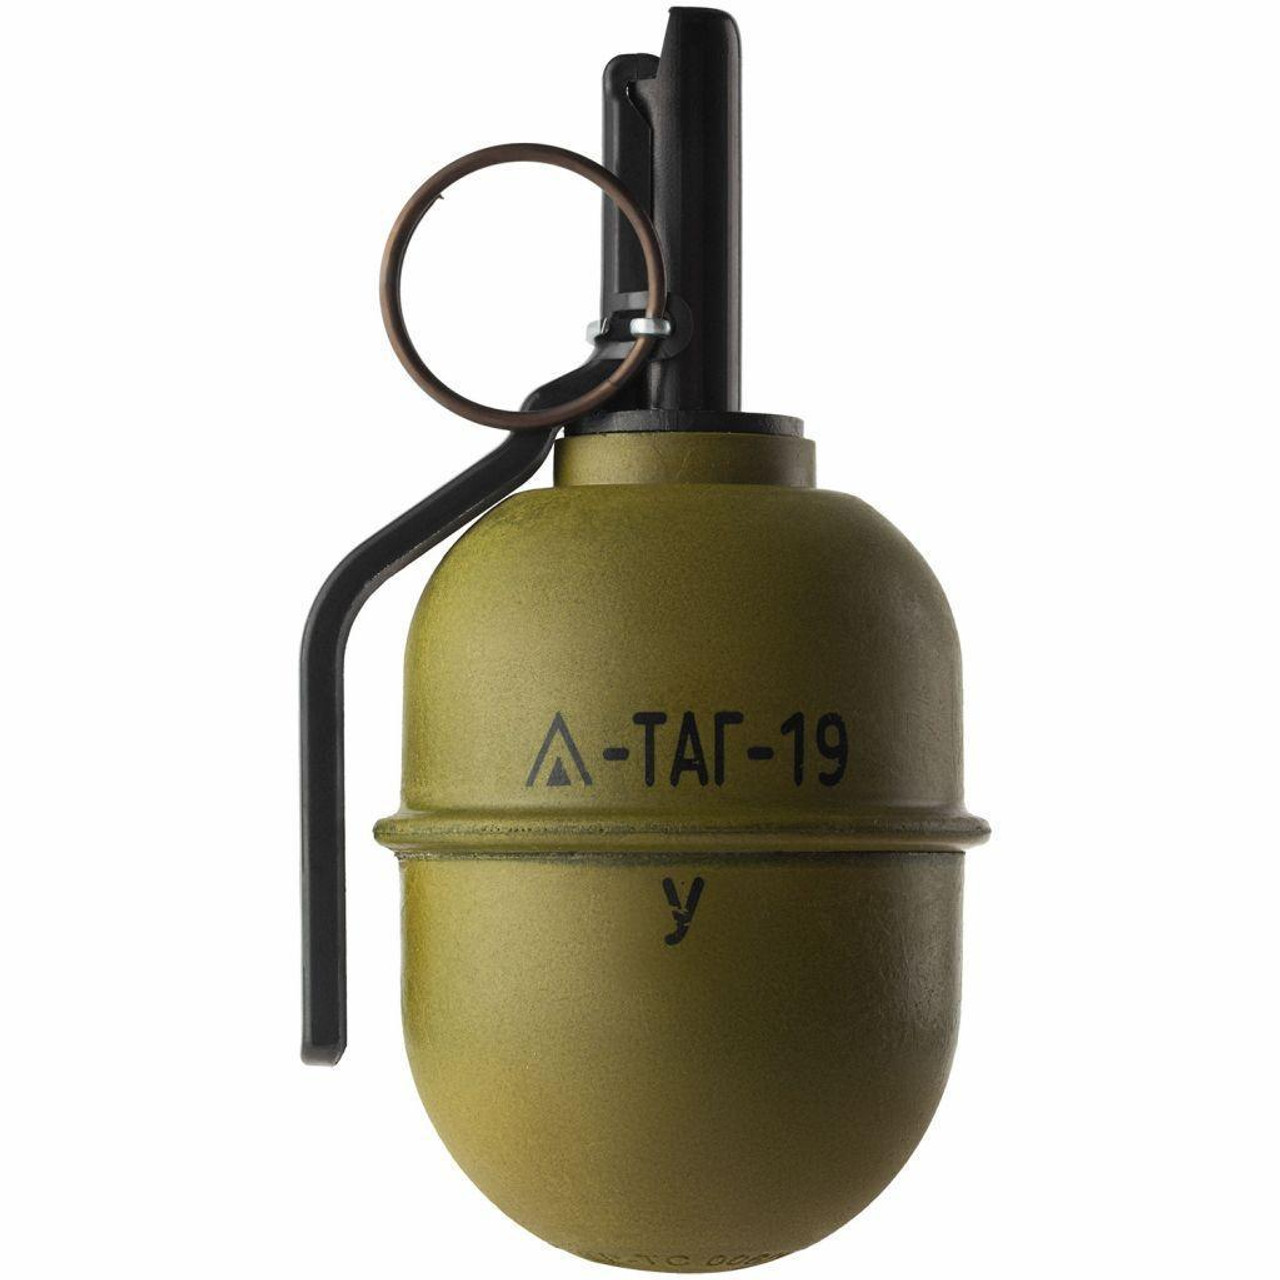 TAGinn - TAG-19Y Airsoft Hand Grenade 6 Pack - Hazmat or pickup